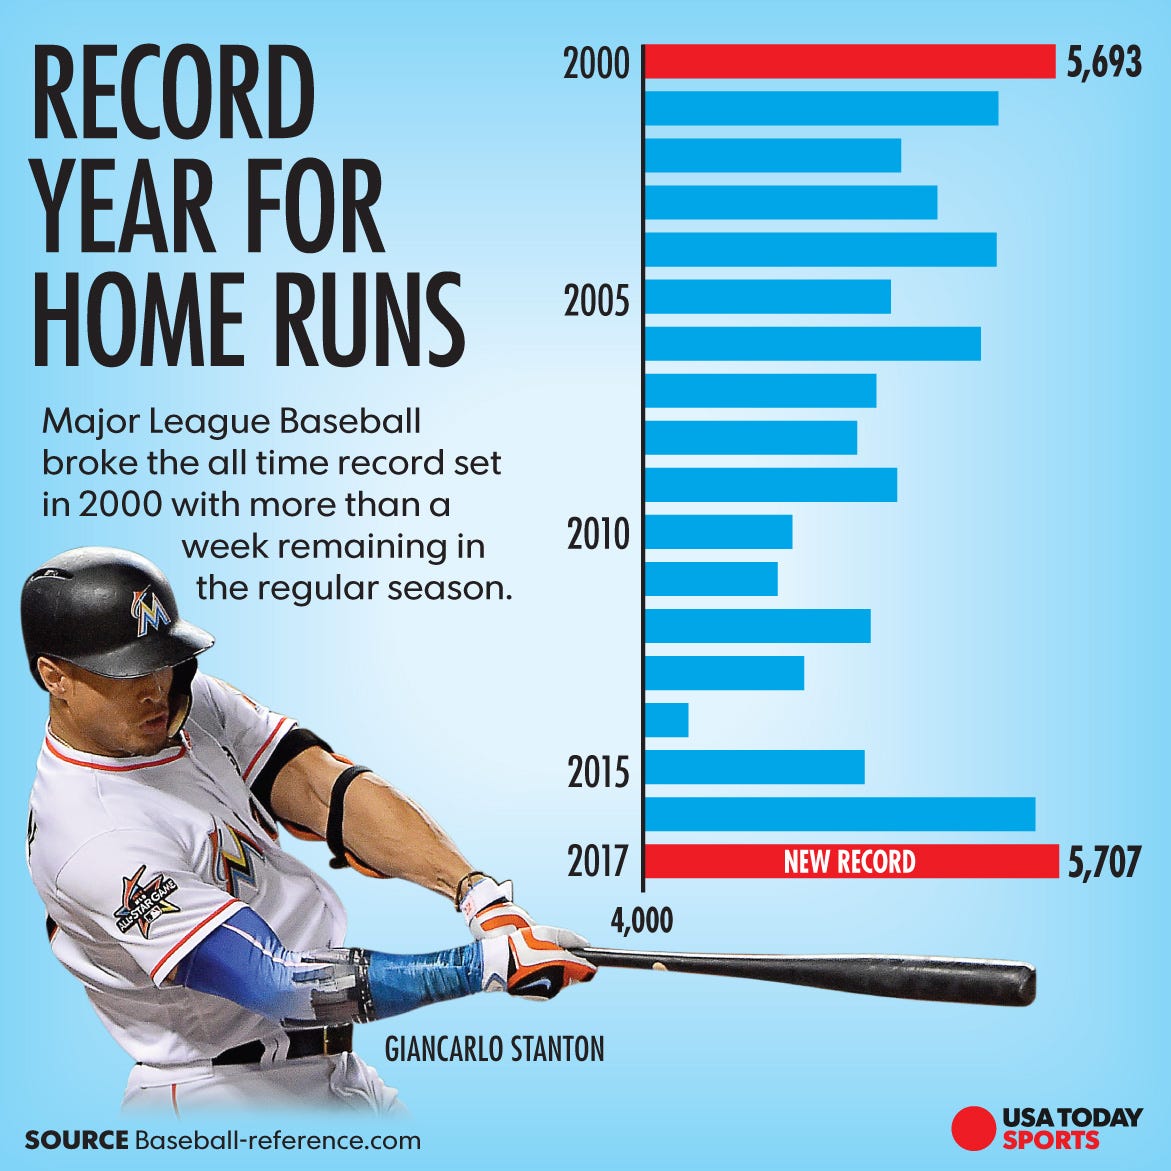 new record for home runs in a season